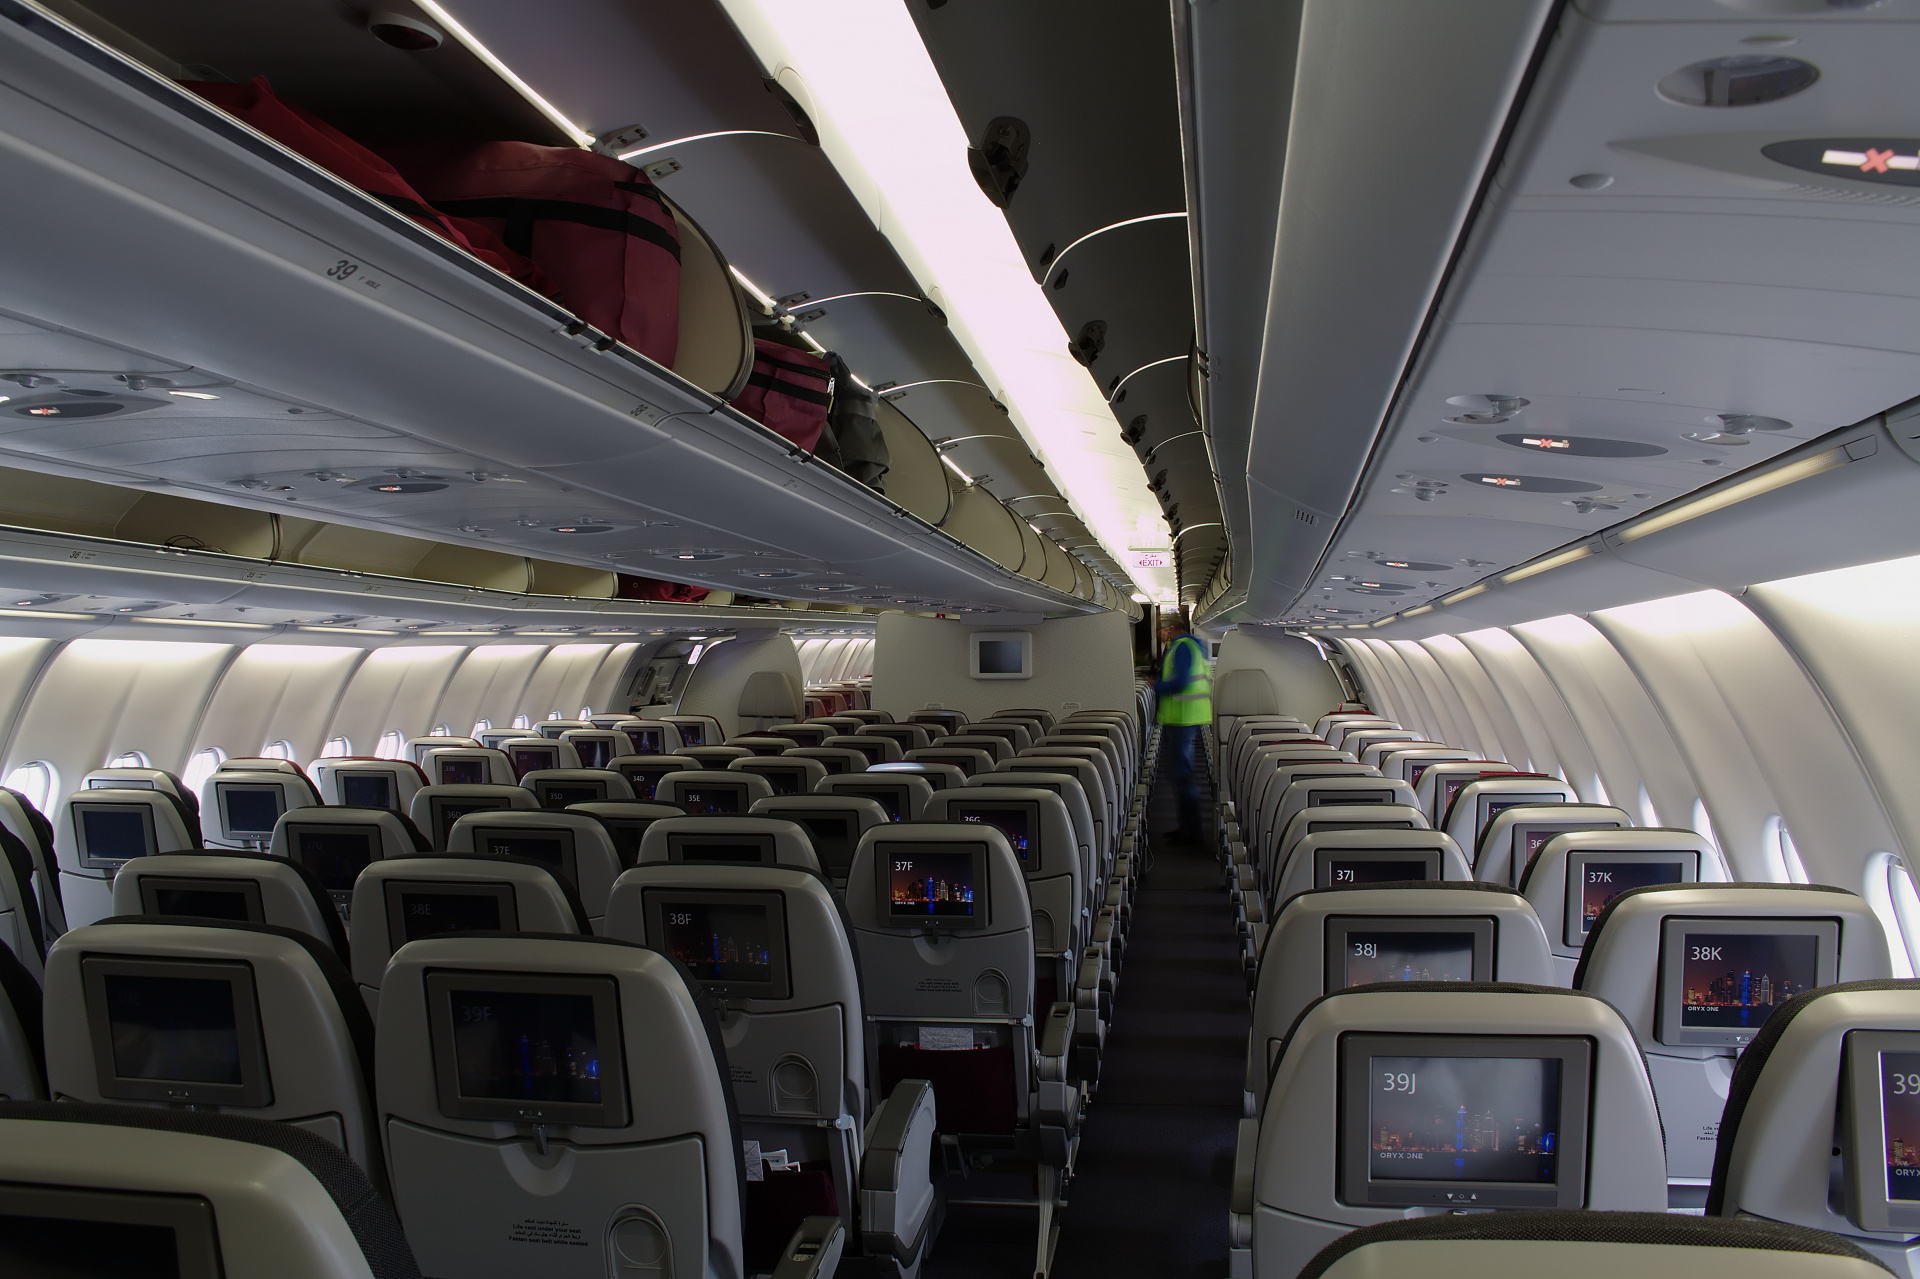 A7-ACG - economy class cabin (Aircraft » EPWA Spotting » Airbus A330-200 » Qatar Airways)